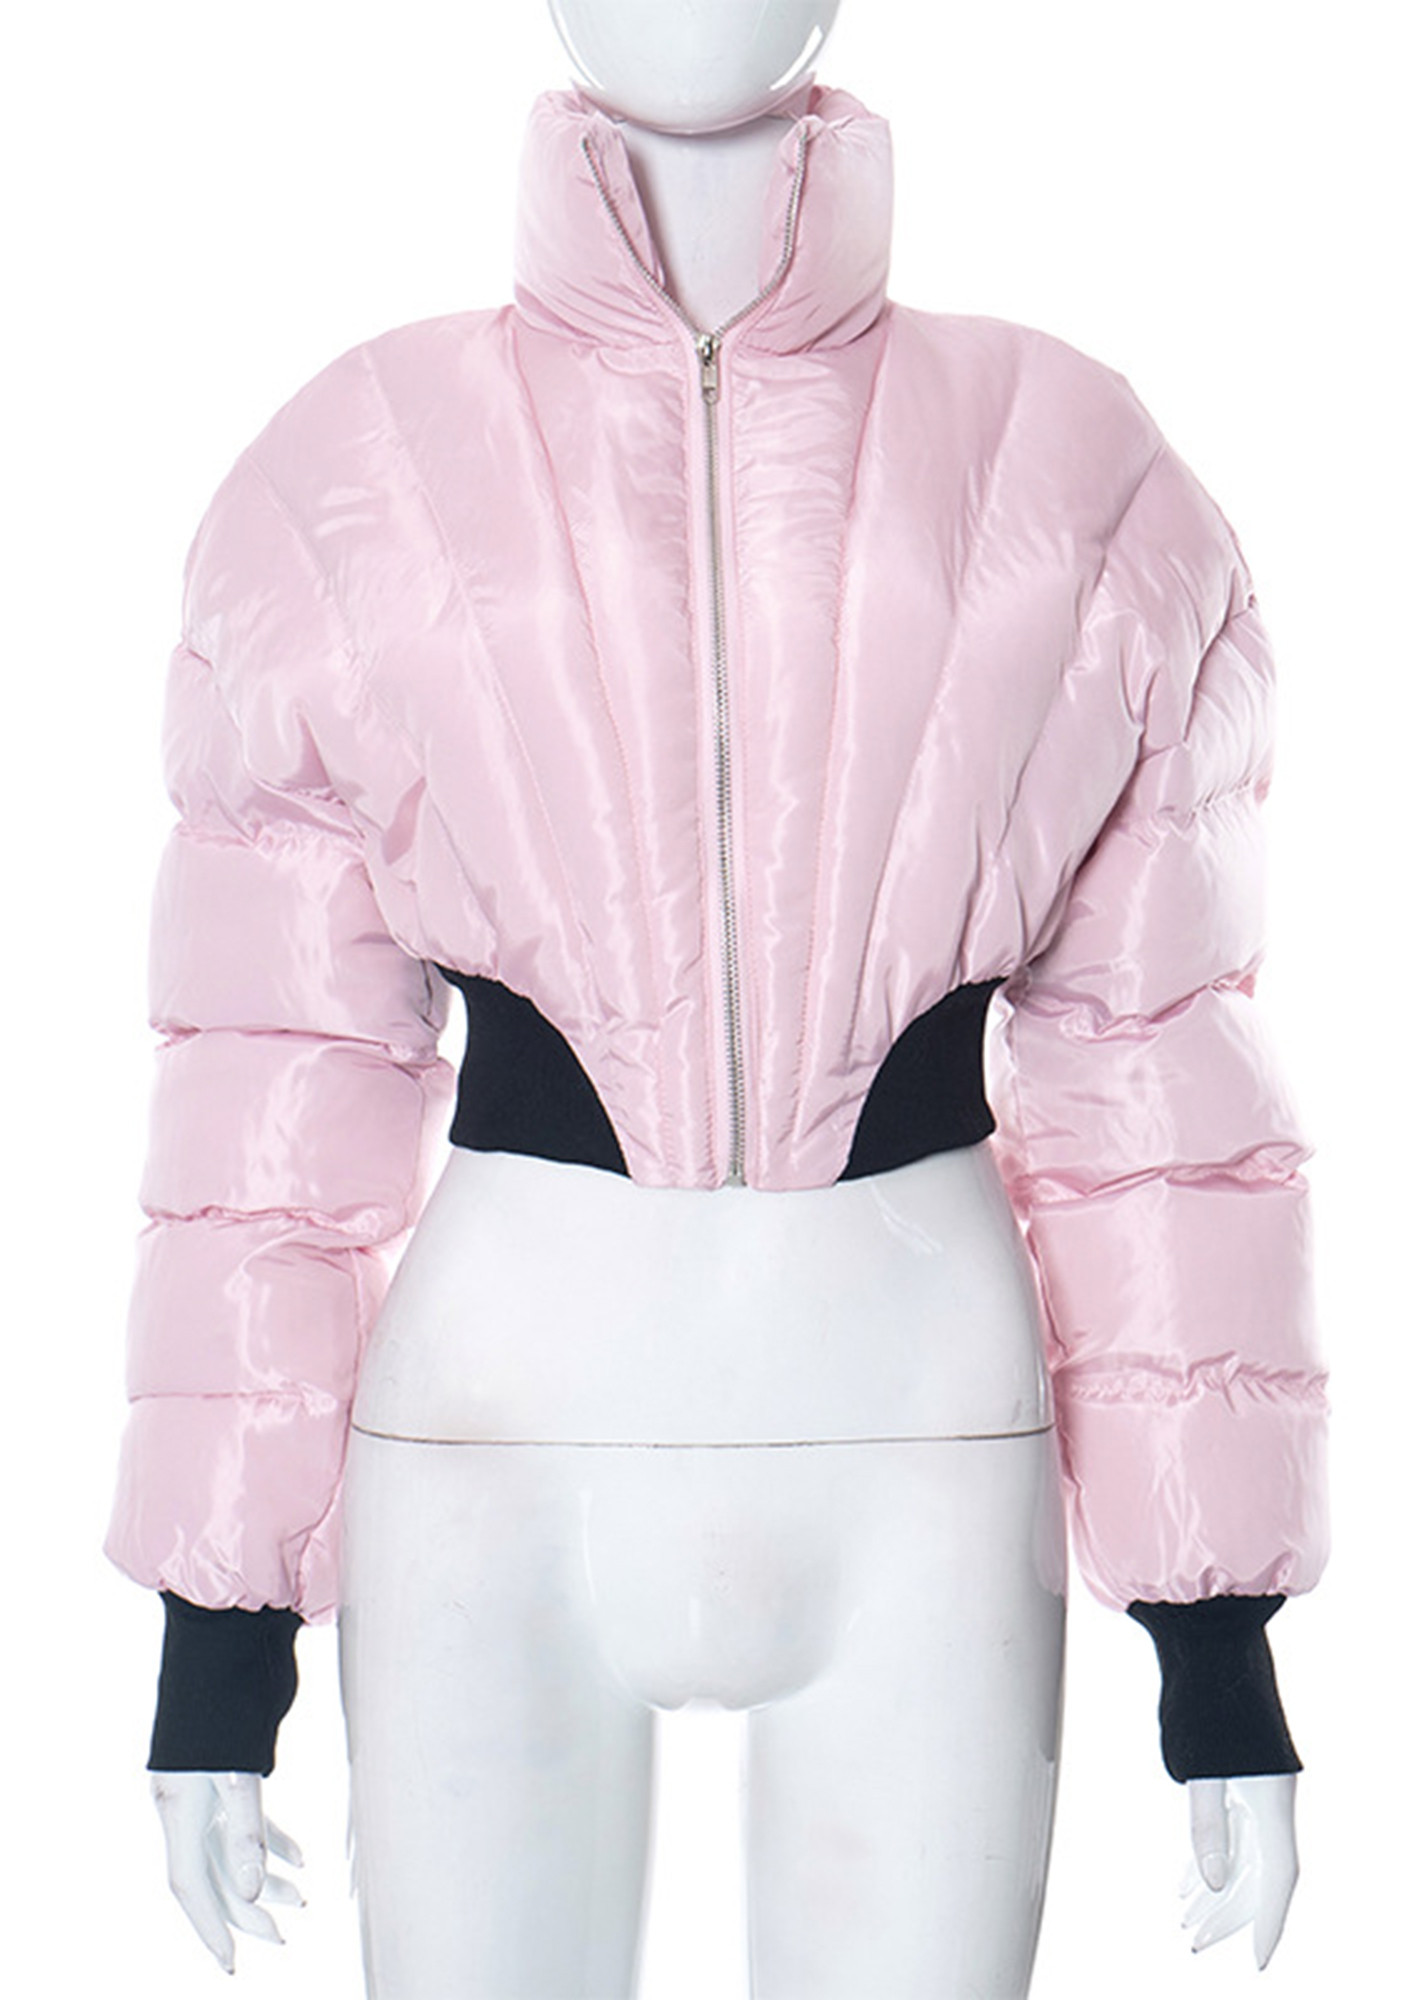 Madison Zombieland Double Tap Pink Puffer Jacket - William Jacket